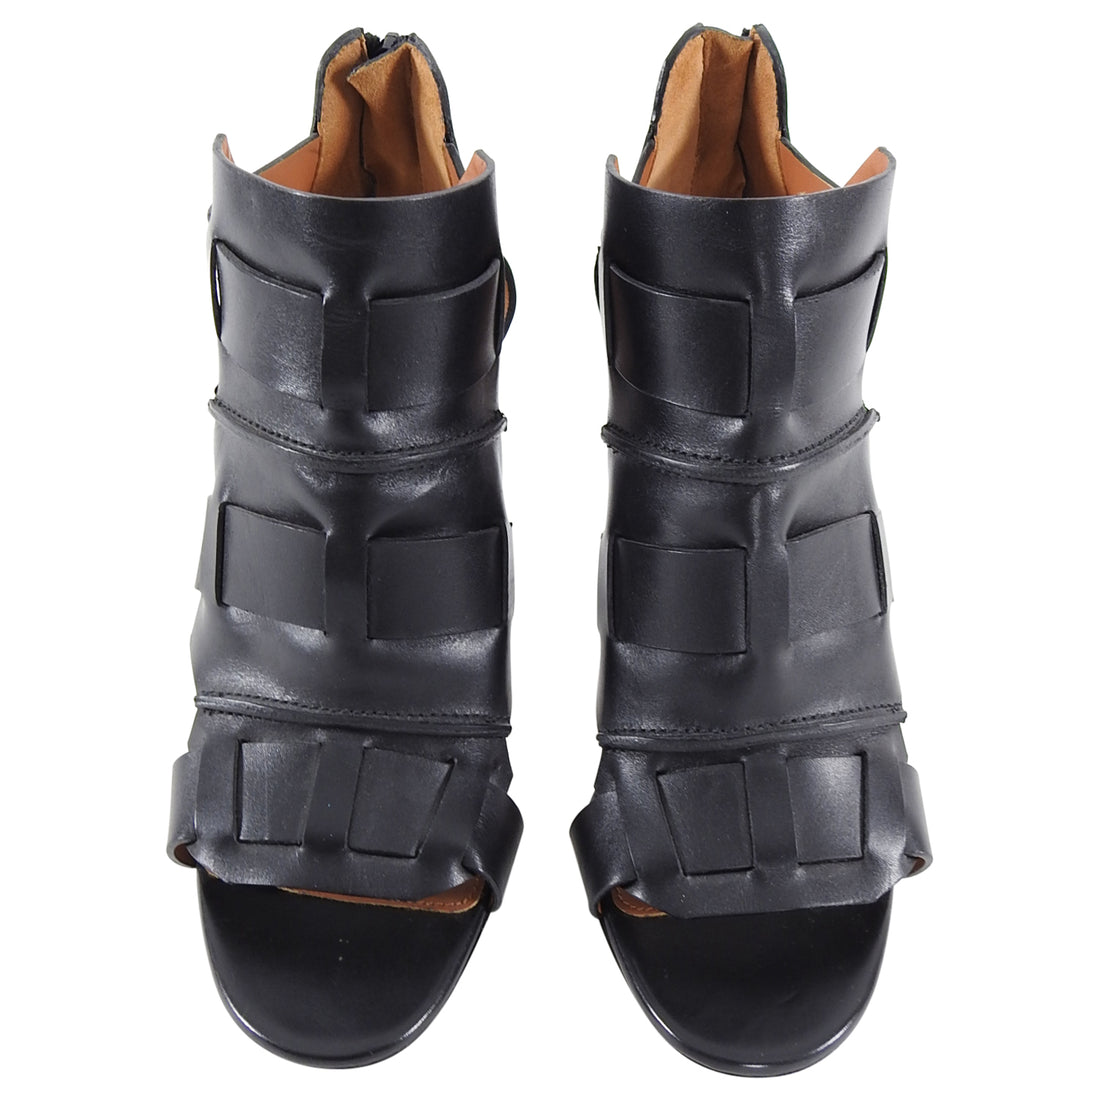 Givenchy Black Leather Gladiator High Heel Sandals - 40